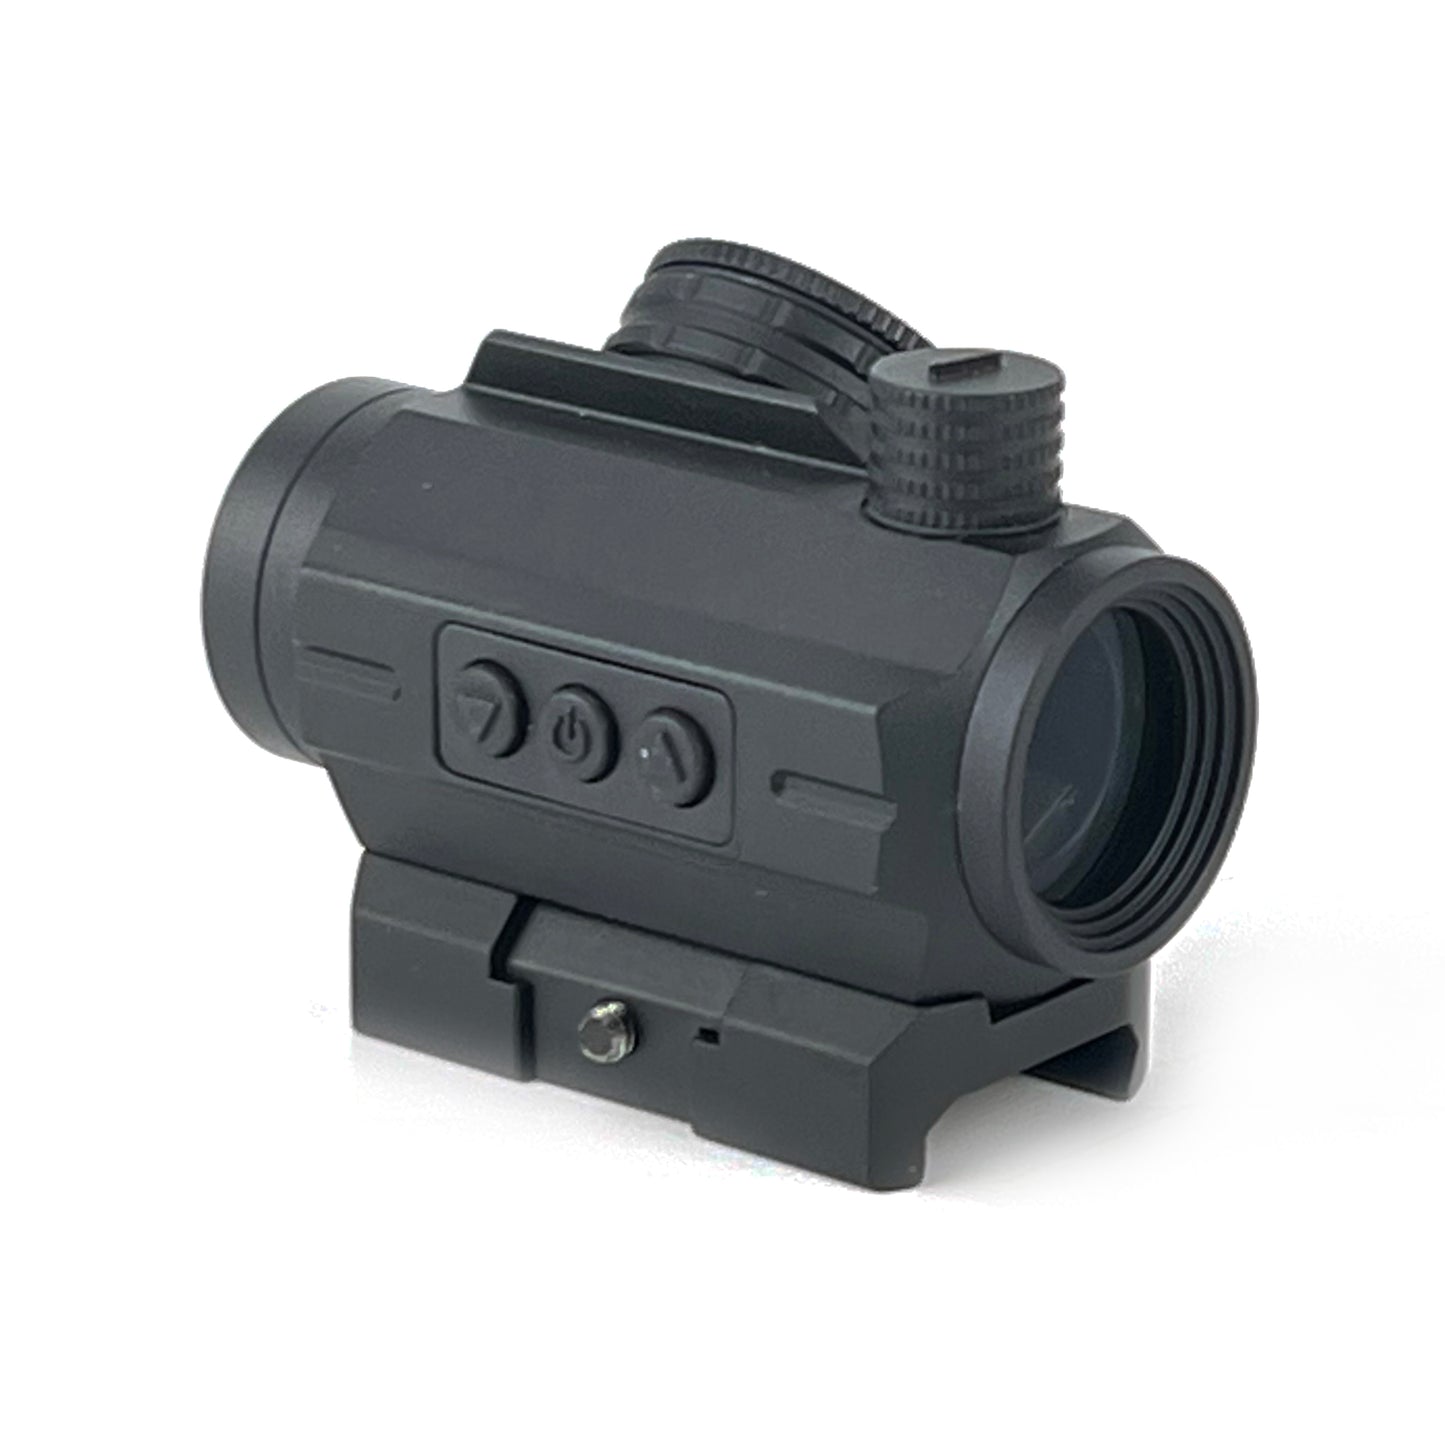 1MOA Mini Red Dot Sight Shooting Reflex Sights Waterproof Shockproof Fogproof Red Dot Scope